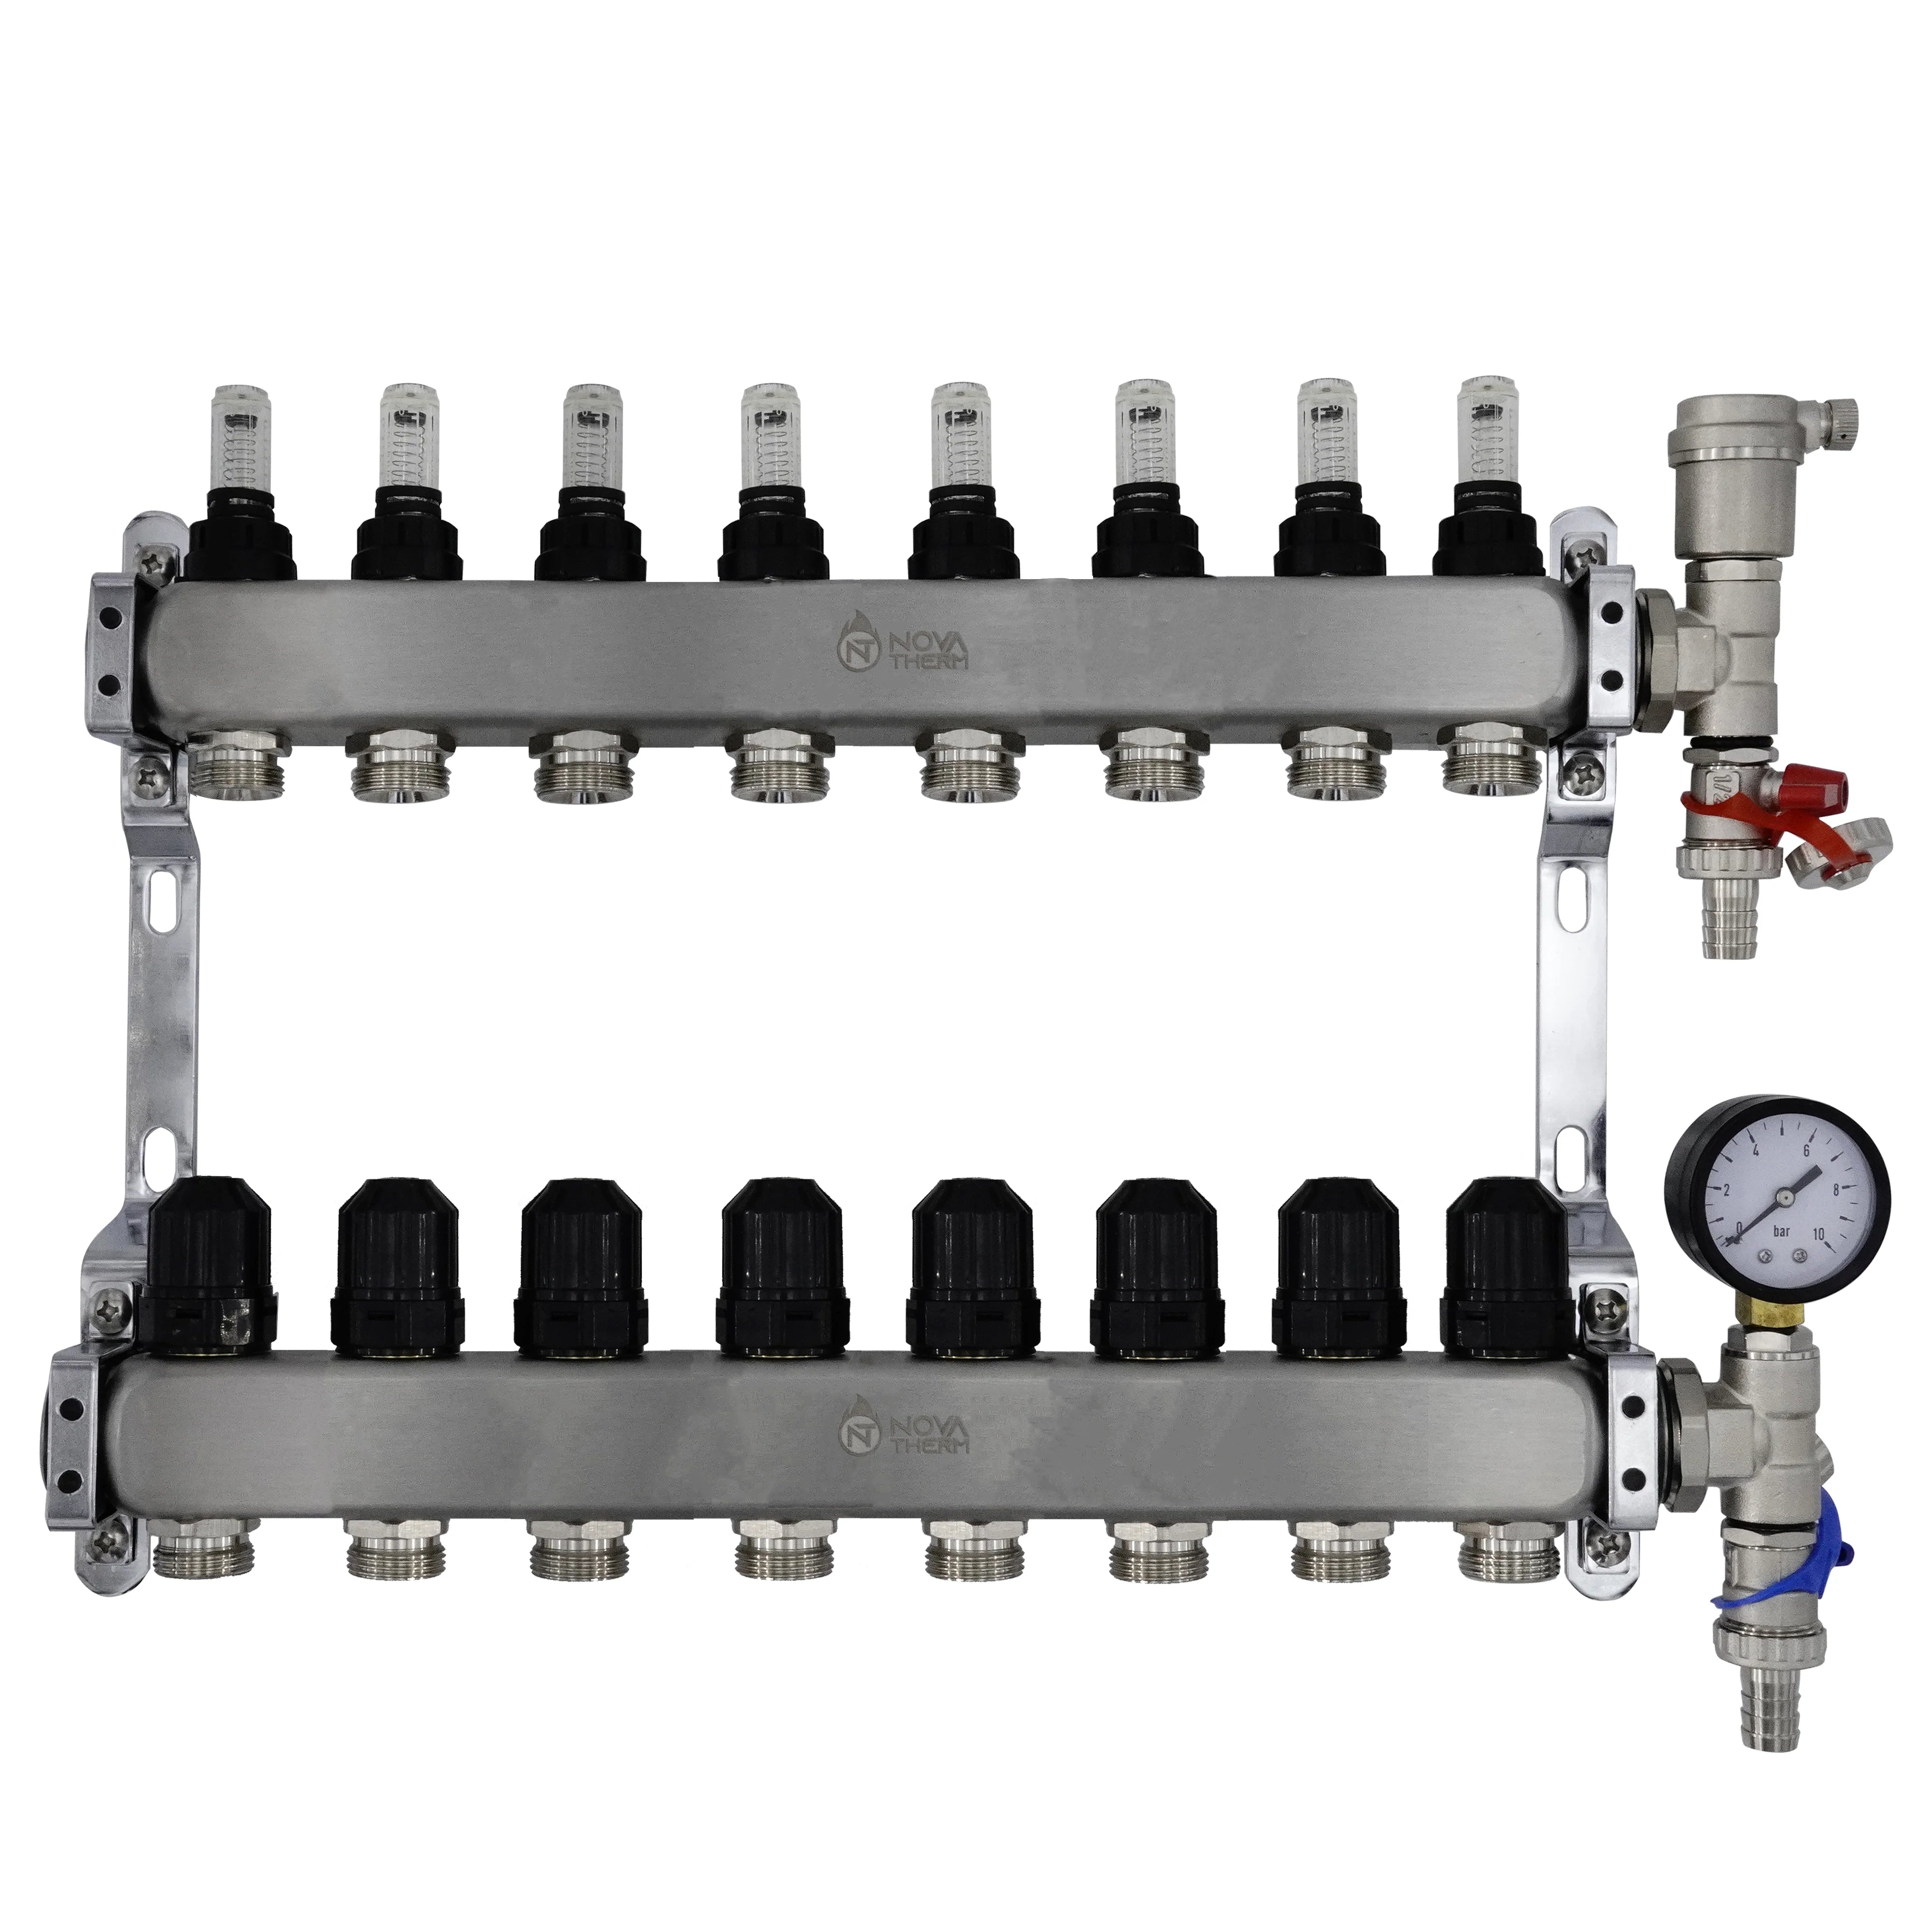 NovaTherm 160sqm Multi-Zone Water Underfloor Heating Kit